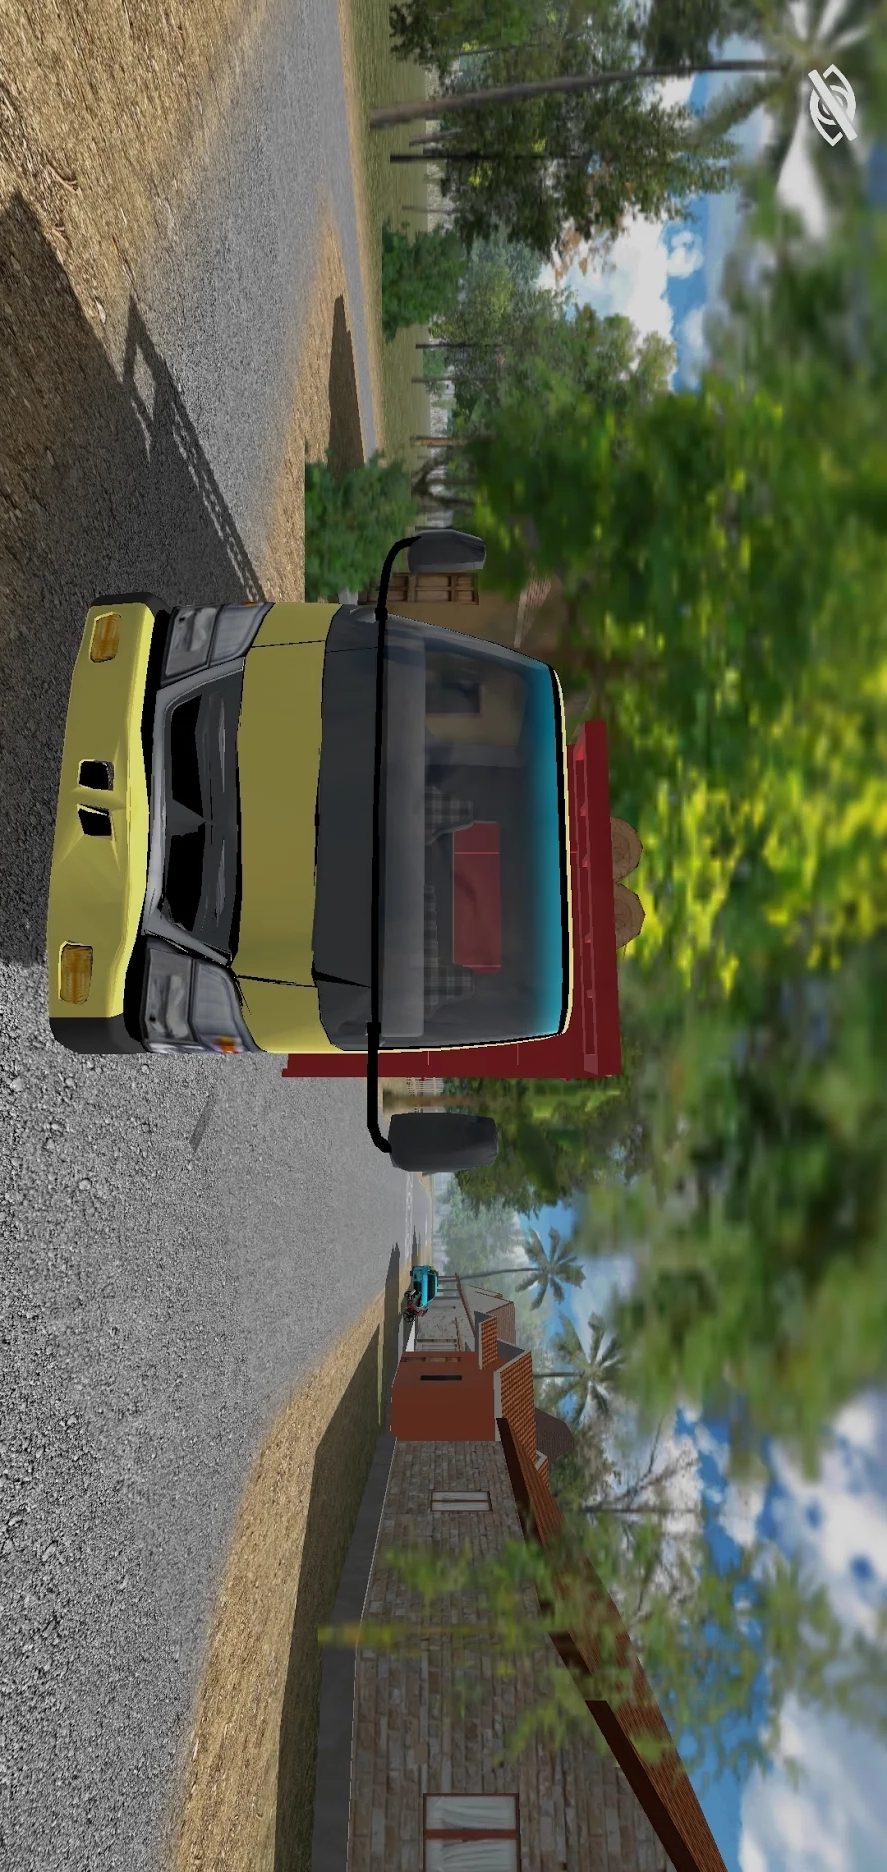 ES Truck Simulator ID(Large amount of money)